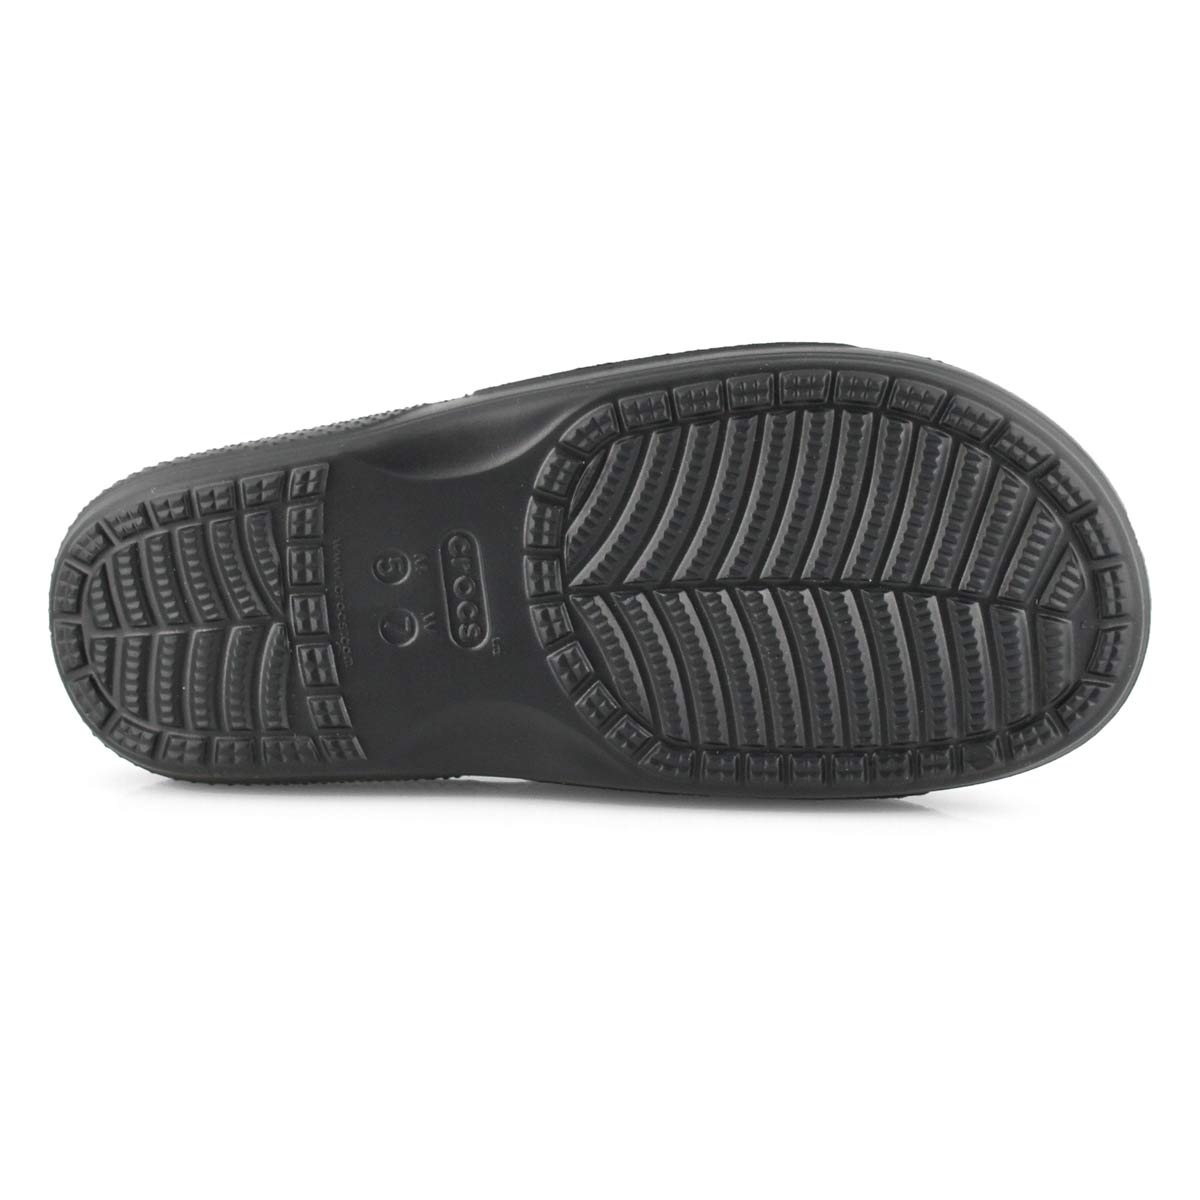 Women's Classic Crocs Tye Dye Slide Sandal - Multi